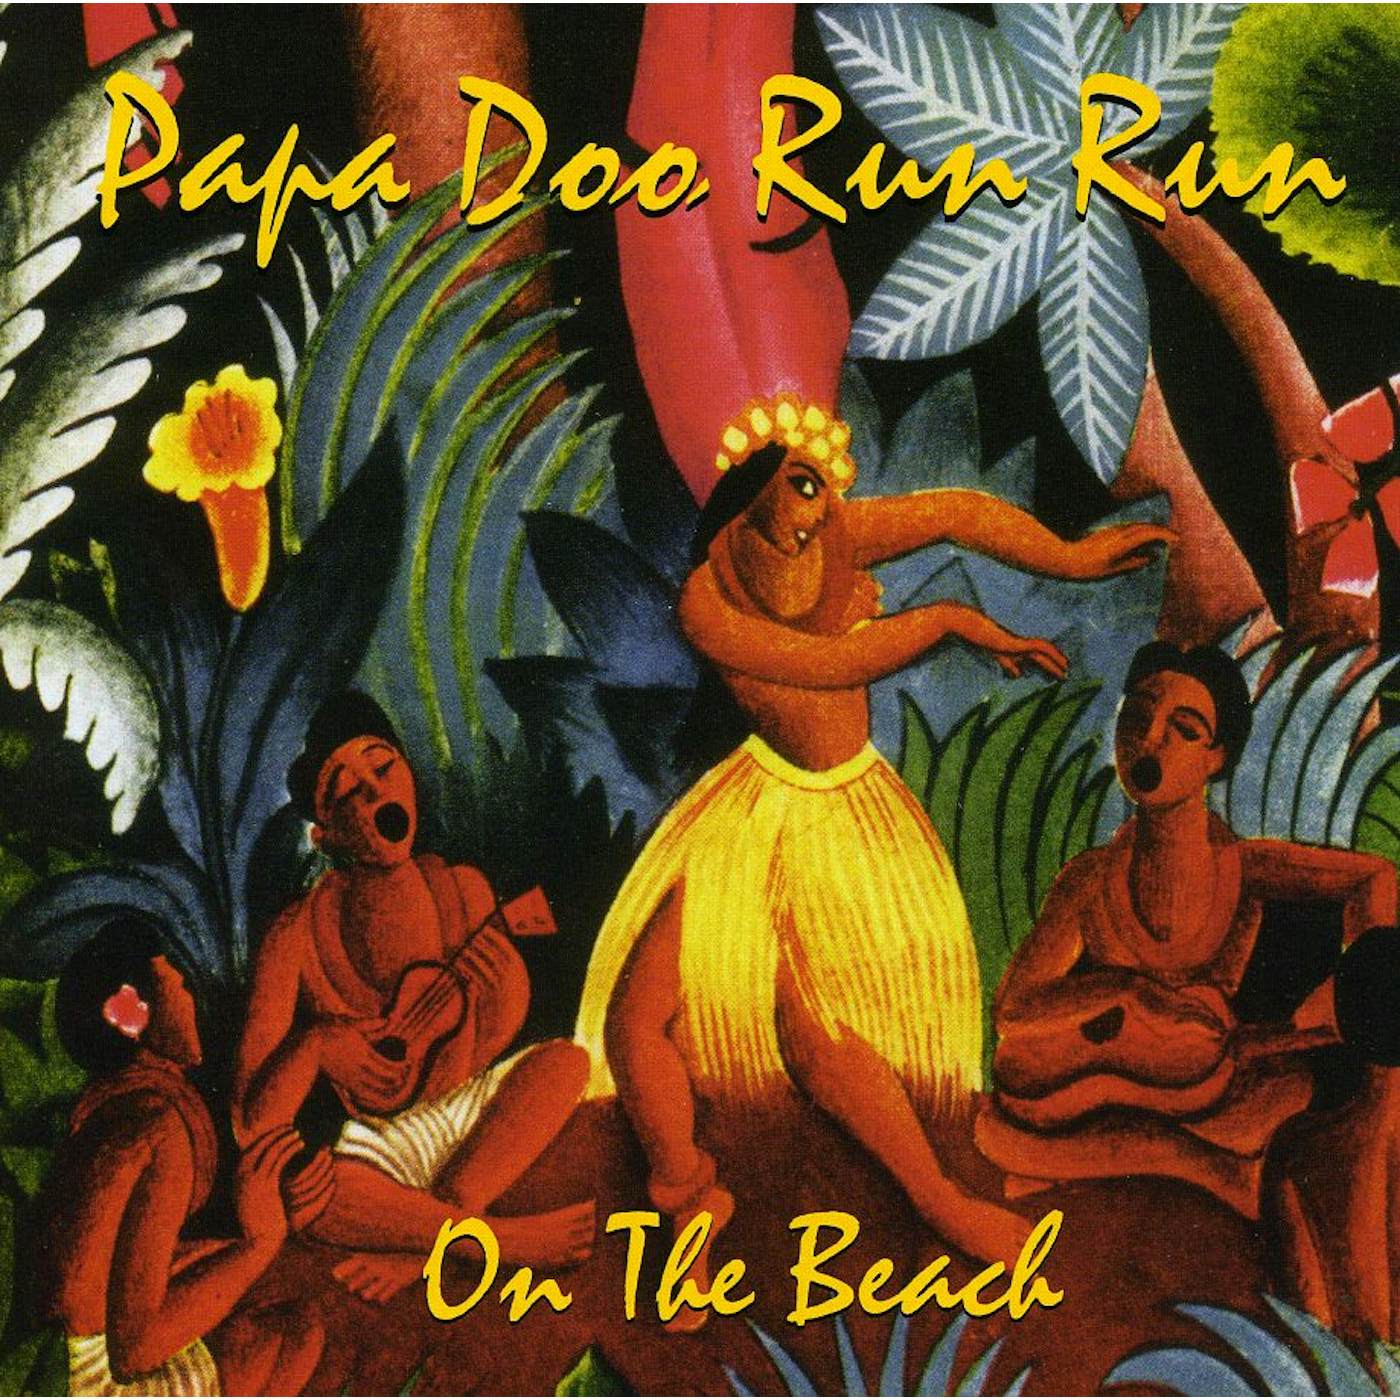 Papa Doo Run Run ON THE BEACH: LIVE CD